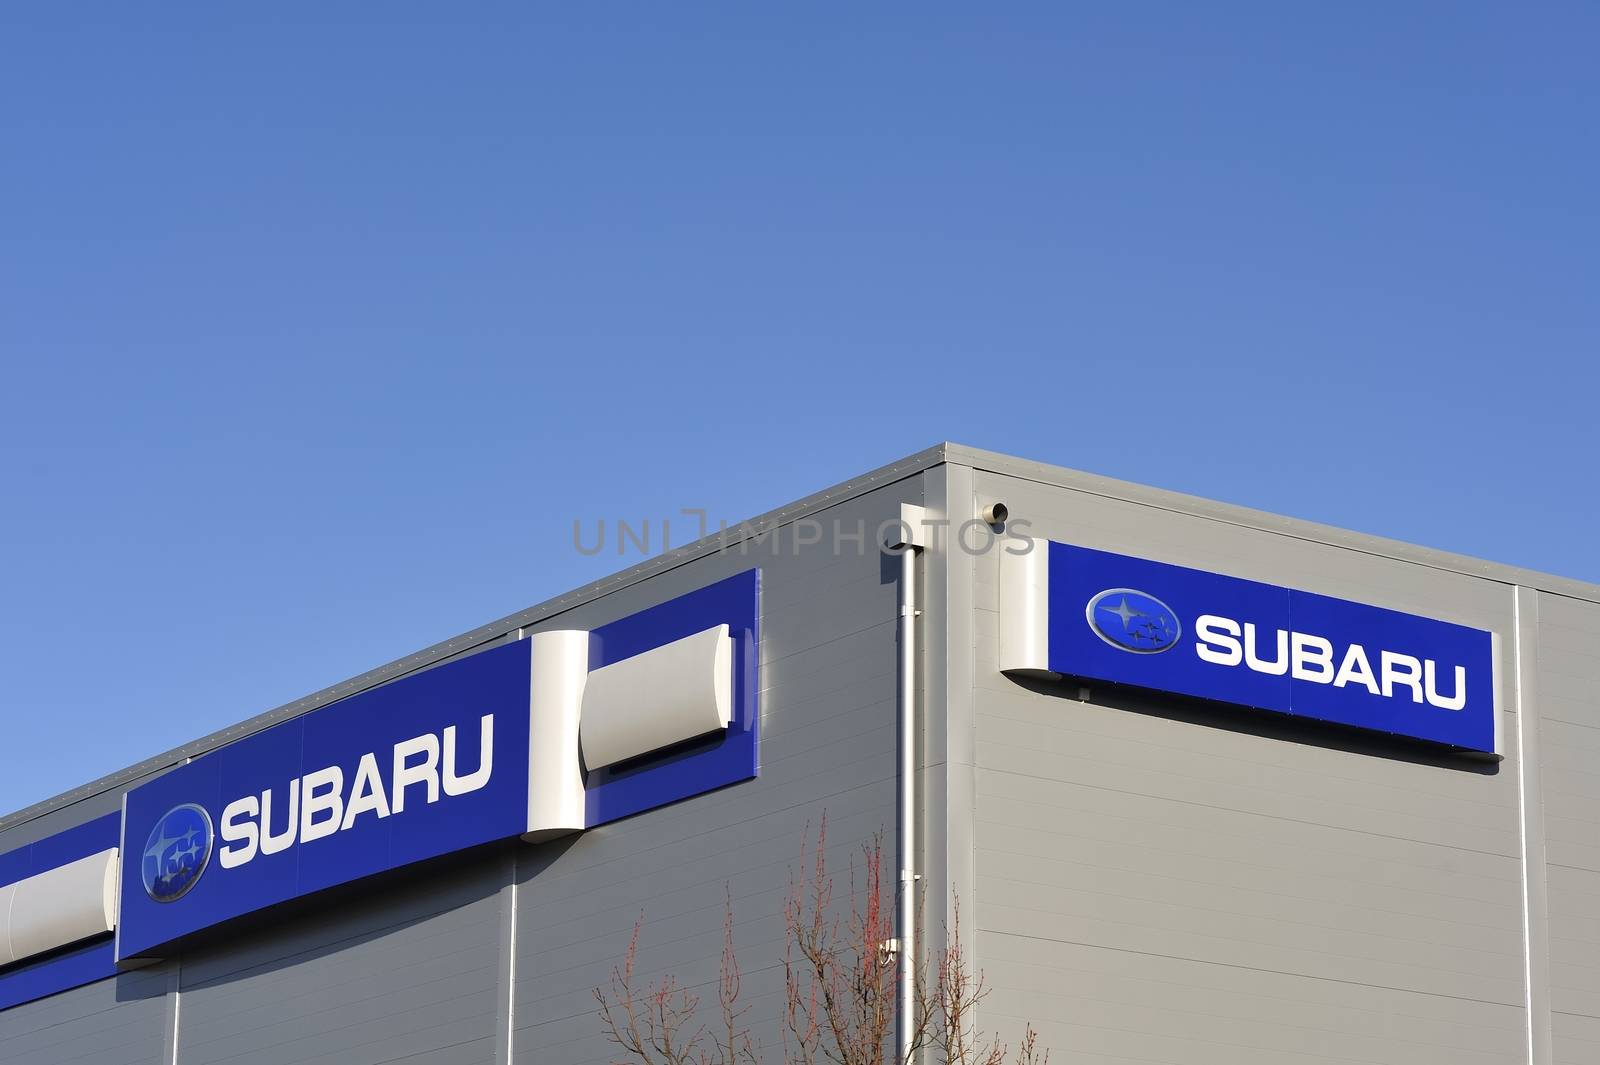 Subaru sign by a40757